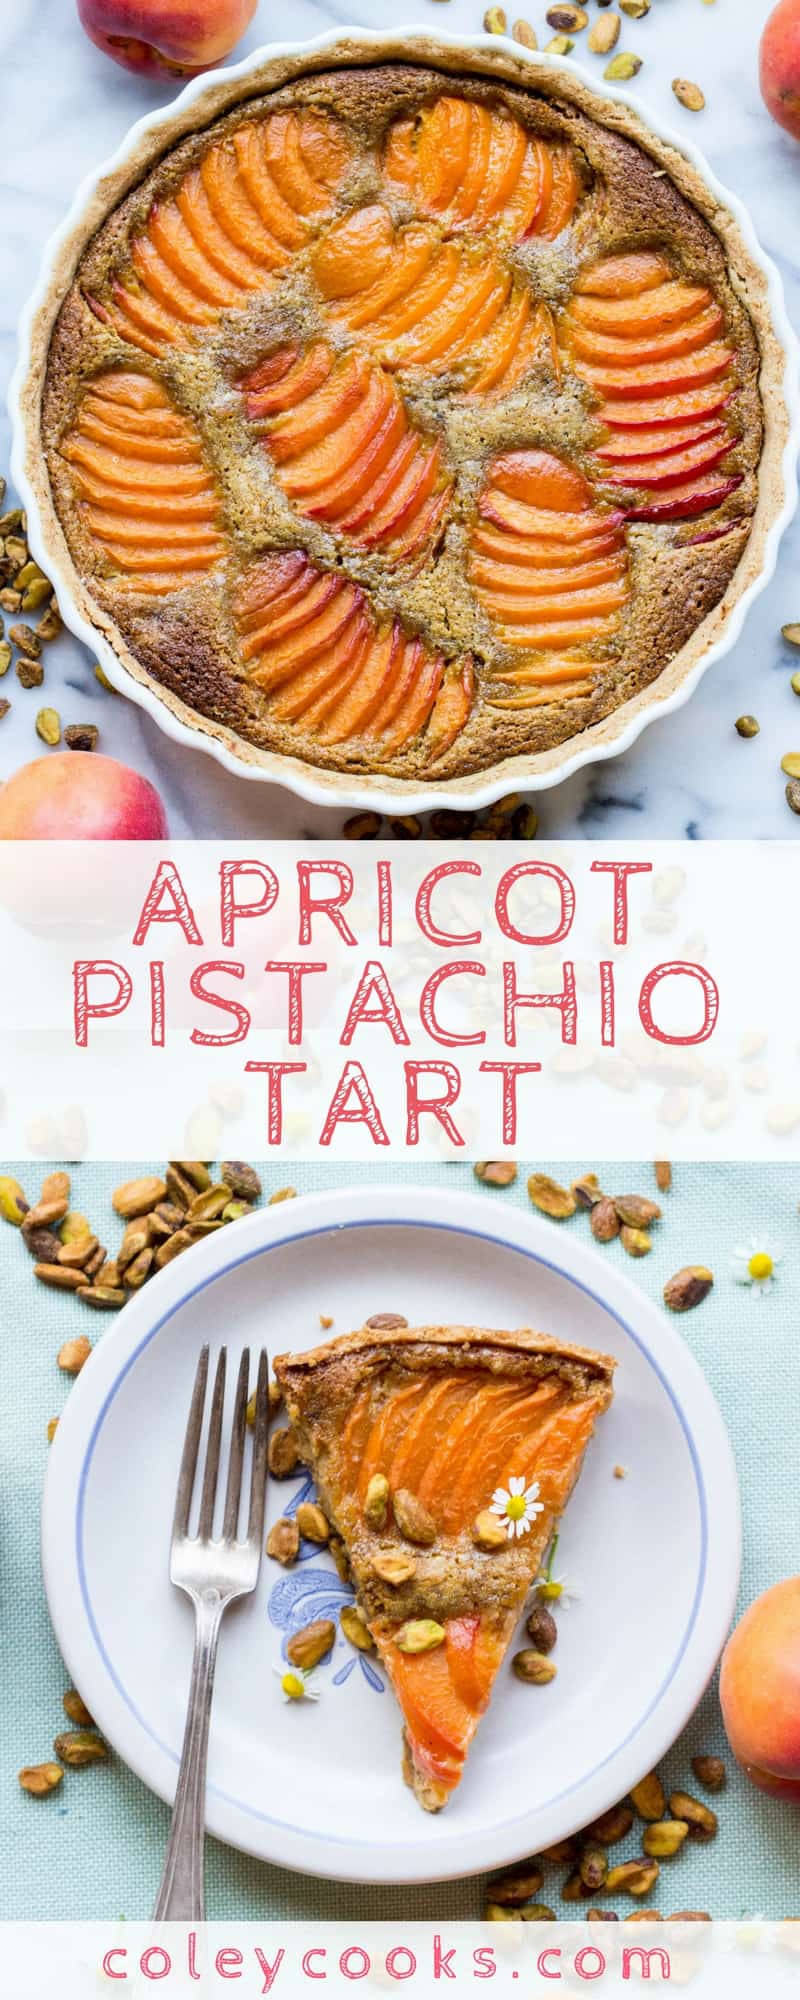 APRICOT PISTACHIO TART | Buttery shortbread crust, pistachio frangipane and juicy fresh apricots. A beautiful, surprisingly easy summer dessert recipe! | ColeyCooks.com